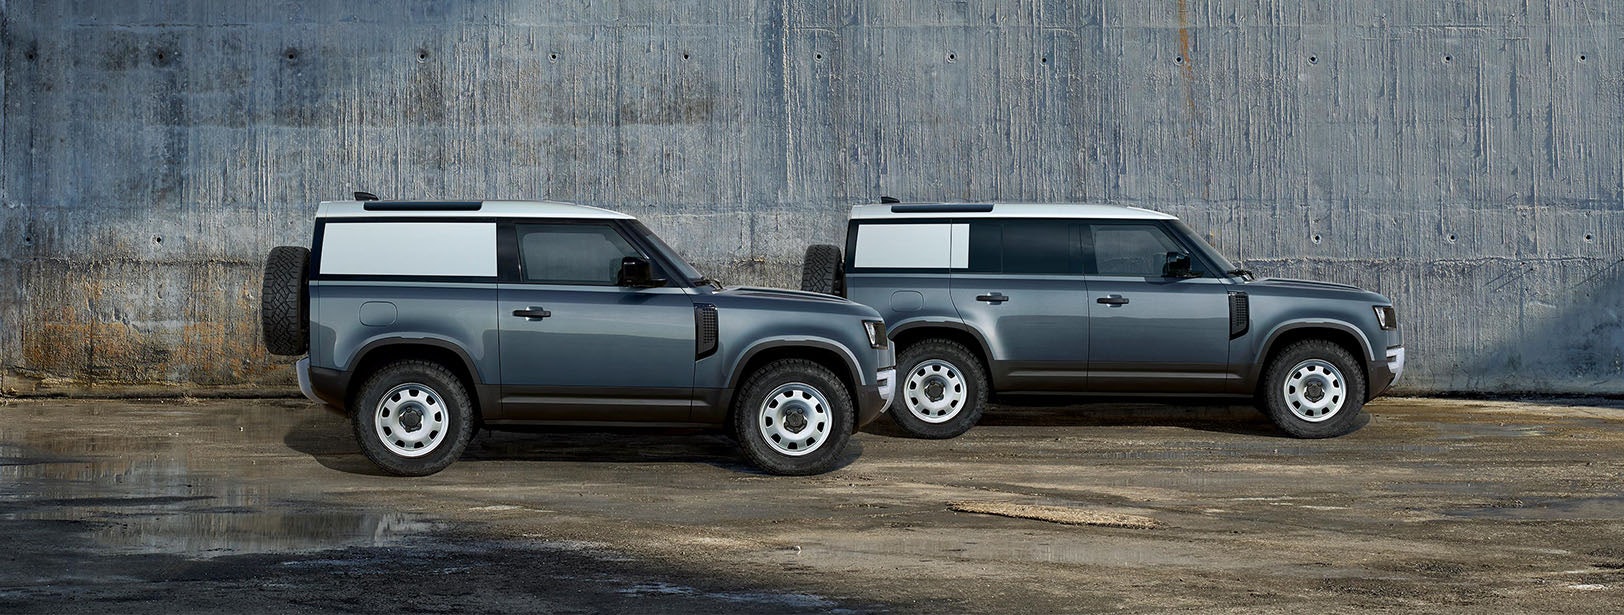 Unsere Land Rover Auswahl